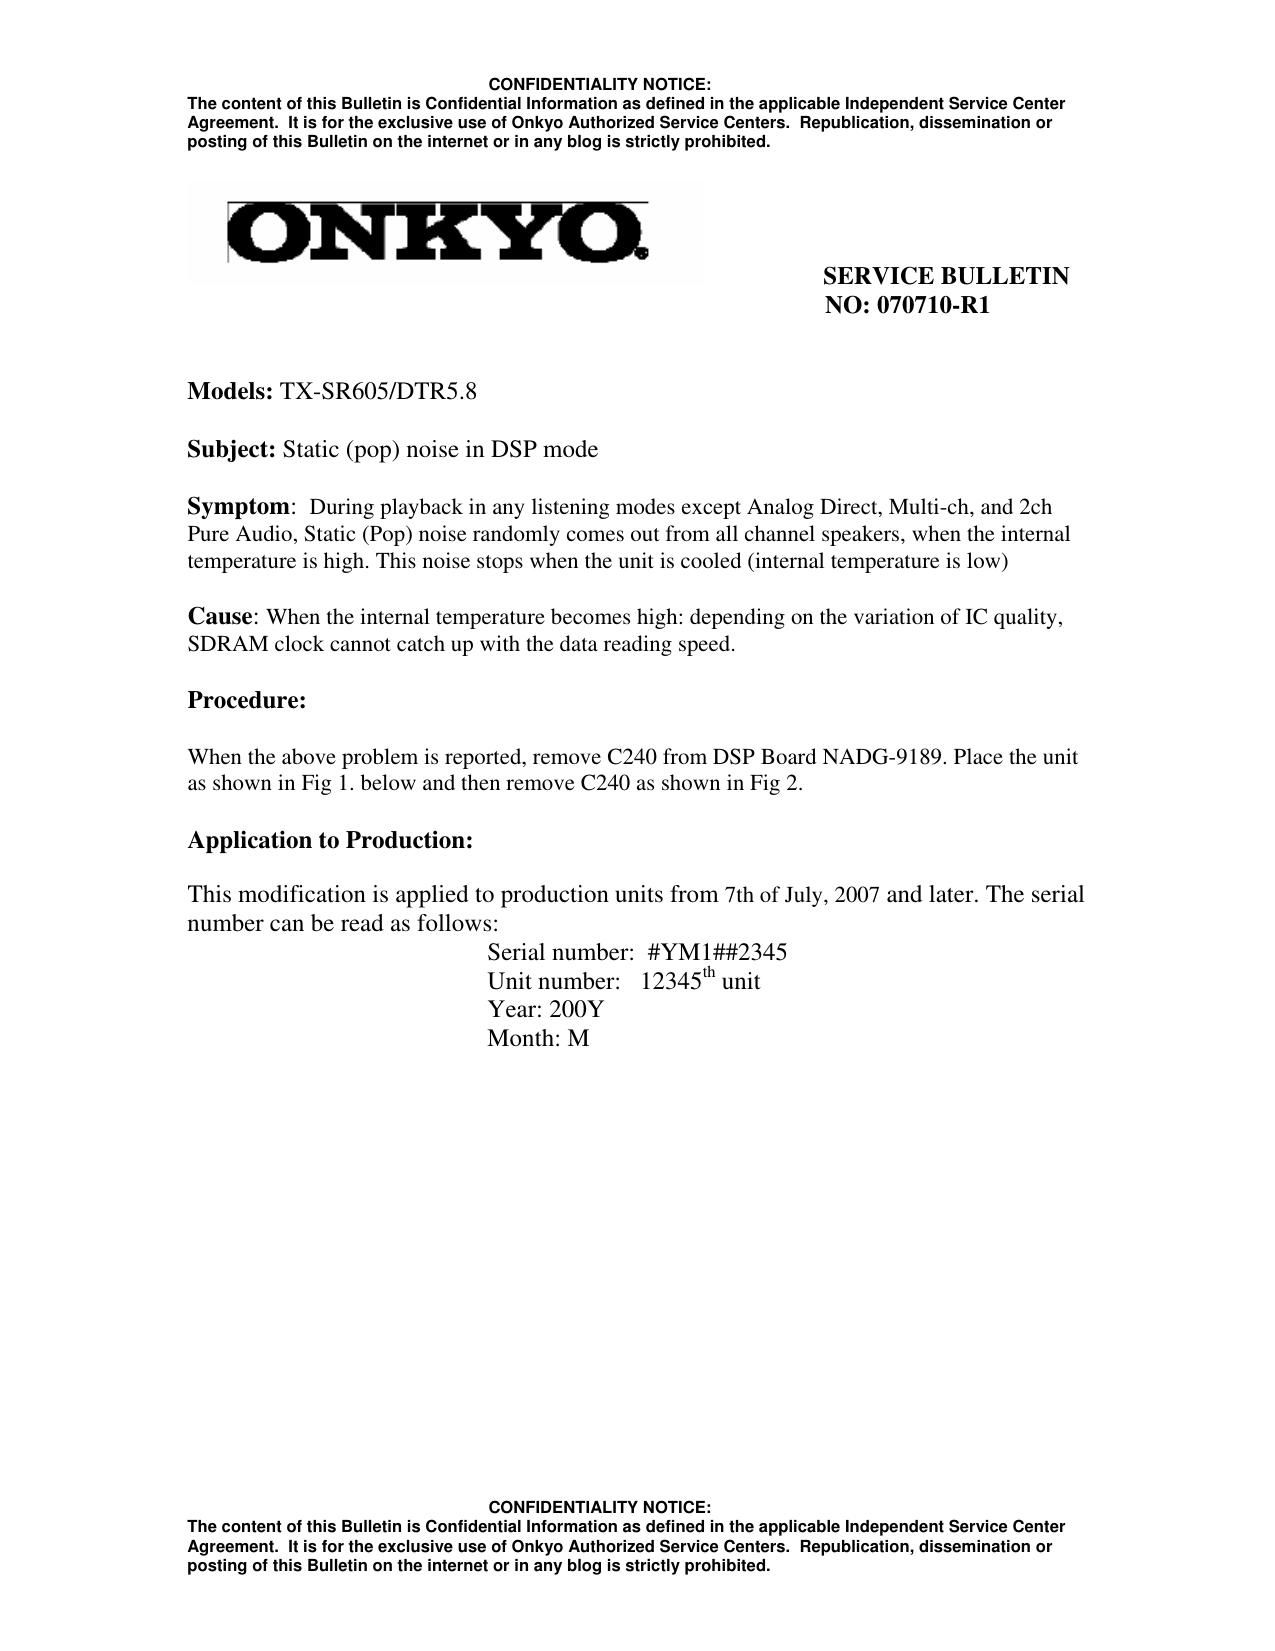 Onkyo TXSR 605 Service Bulletin